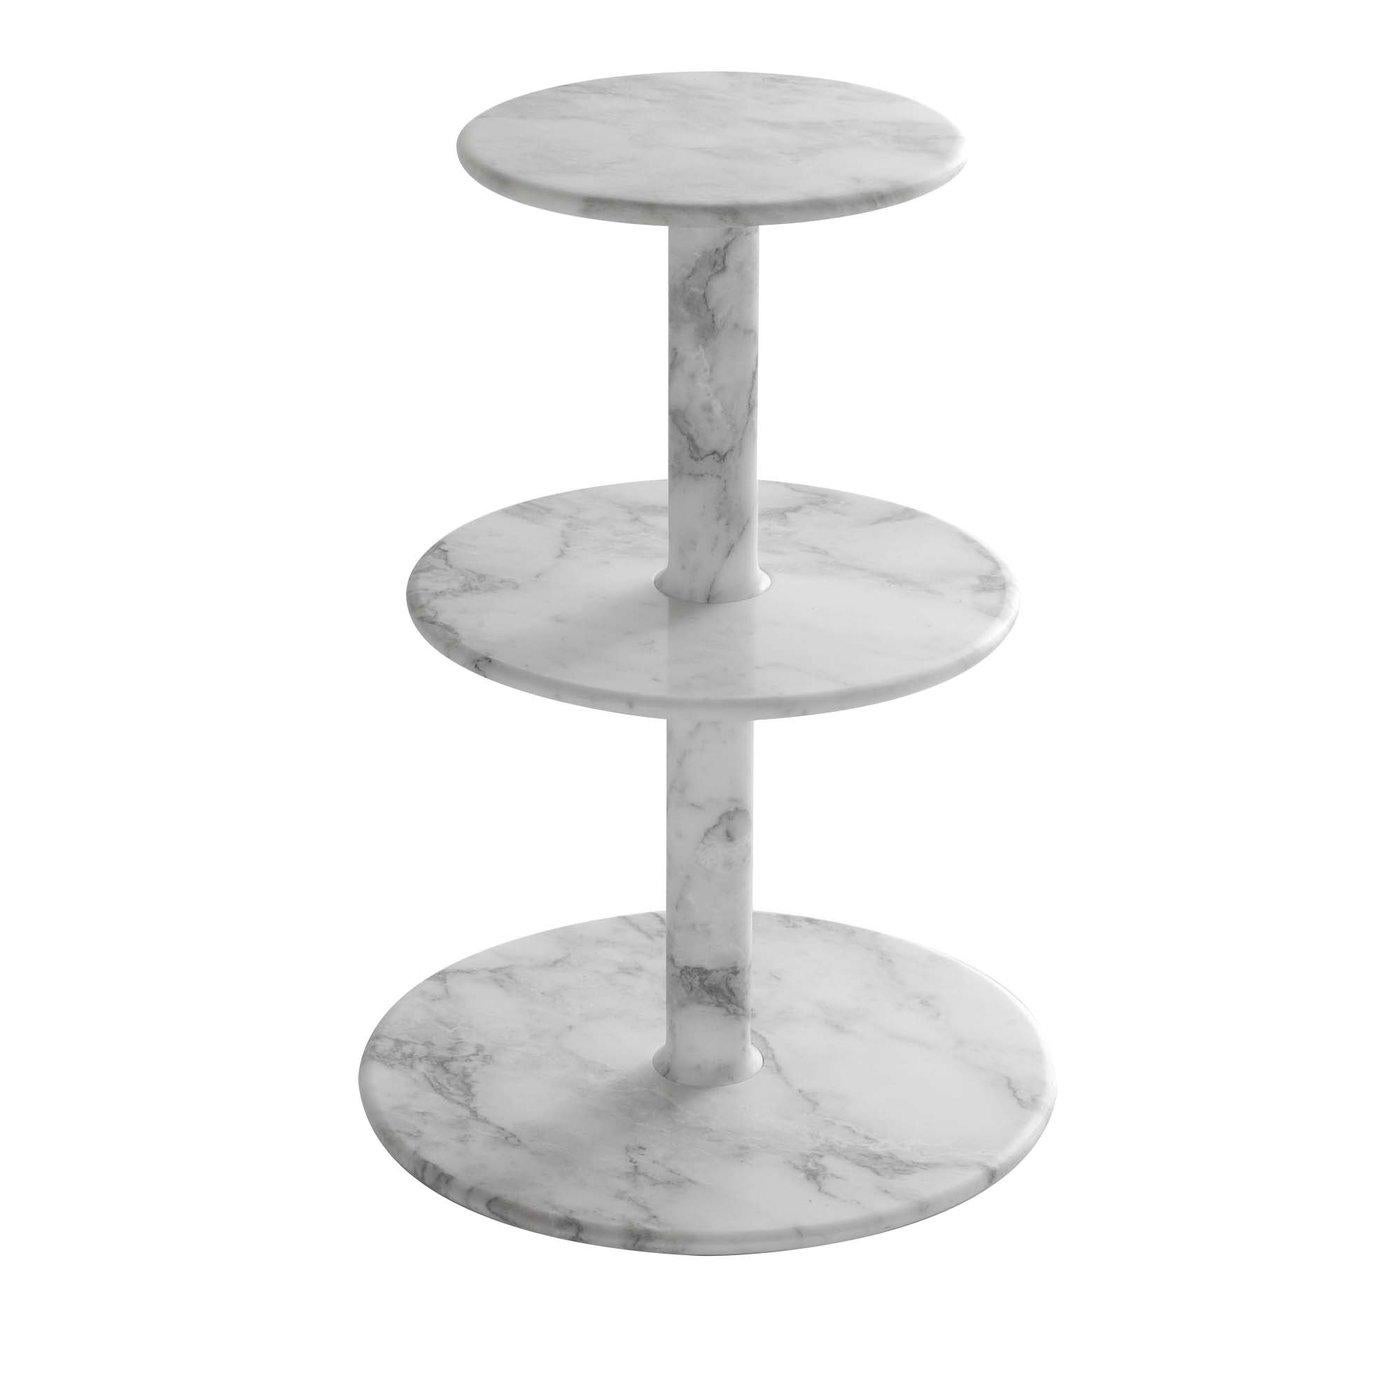 Shelves on column in white Carrara or Arabescato marble, matt polished finish.